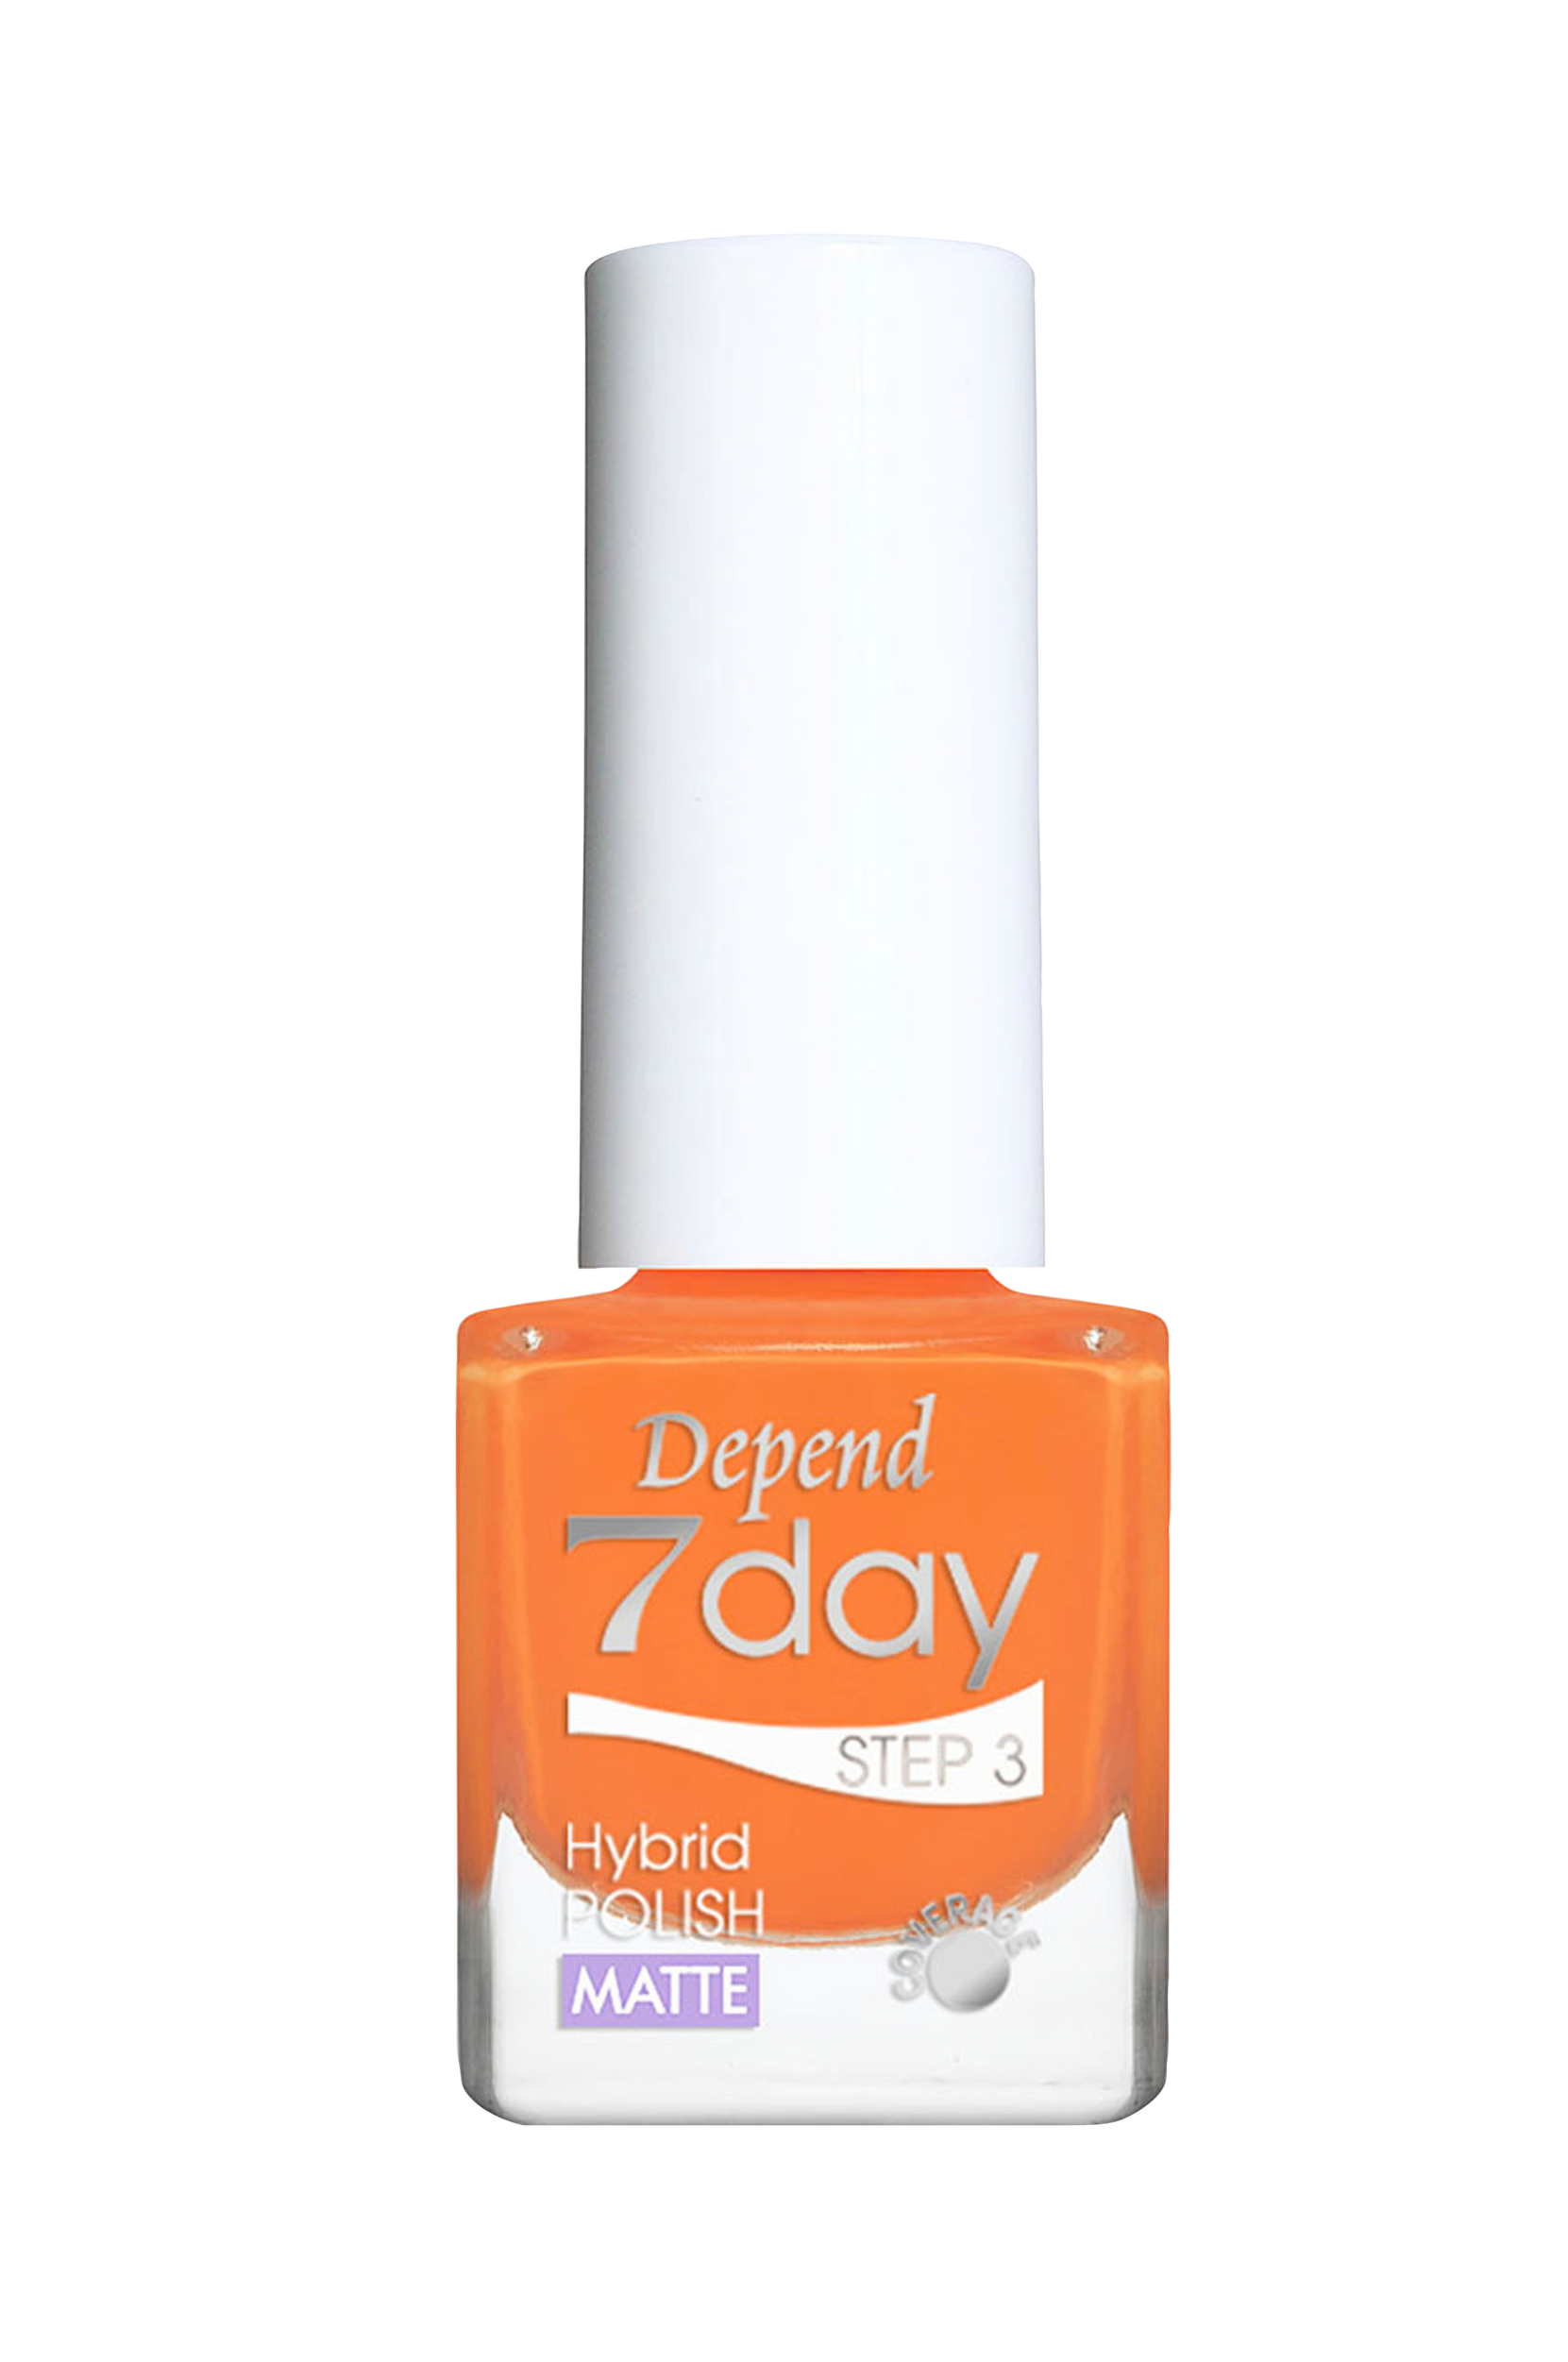 Depend - 7day Hybrid Polish - Orange